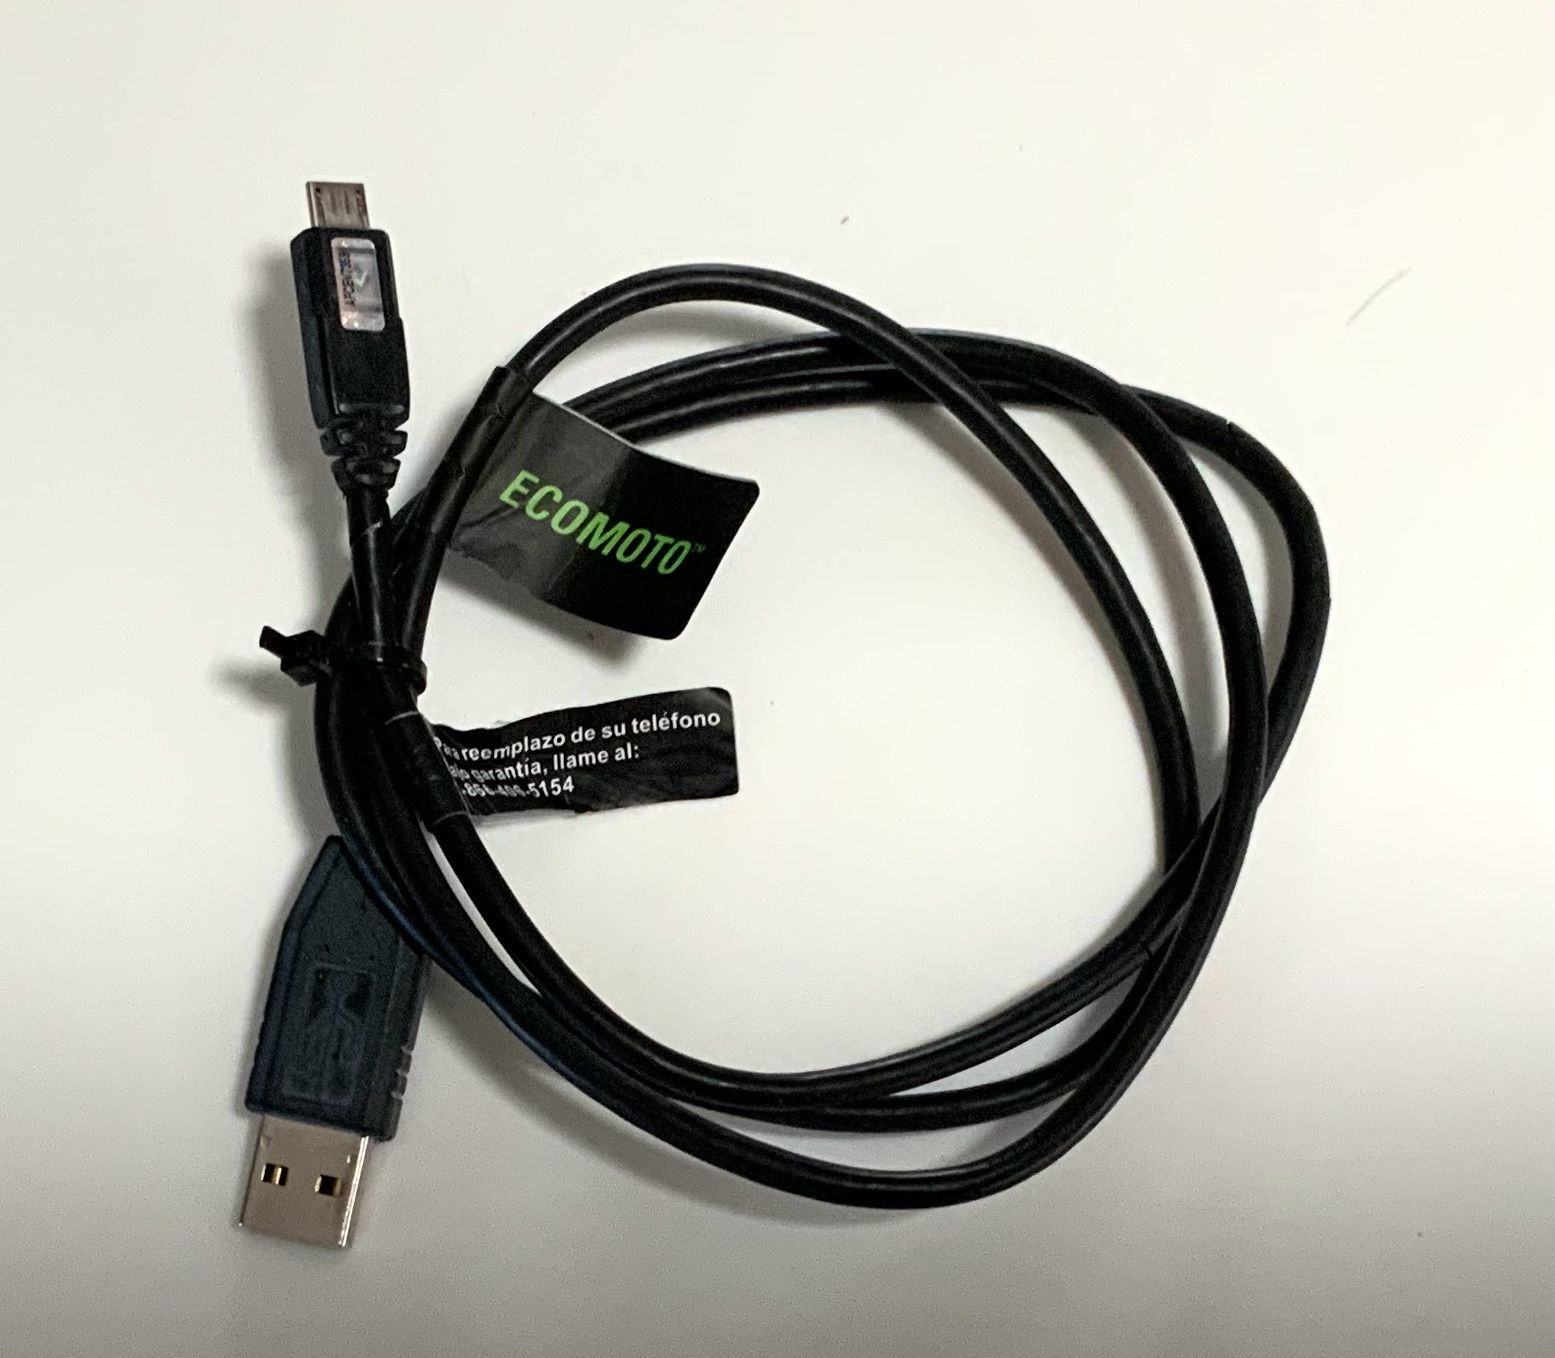 Motorola ECOMOTO USB Data Cable for numerous Motorola devices